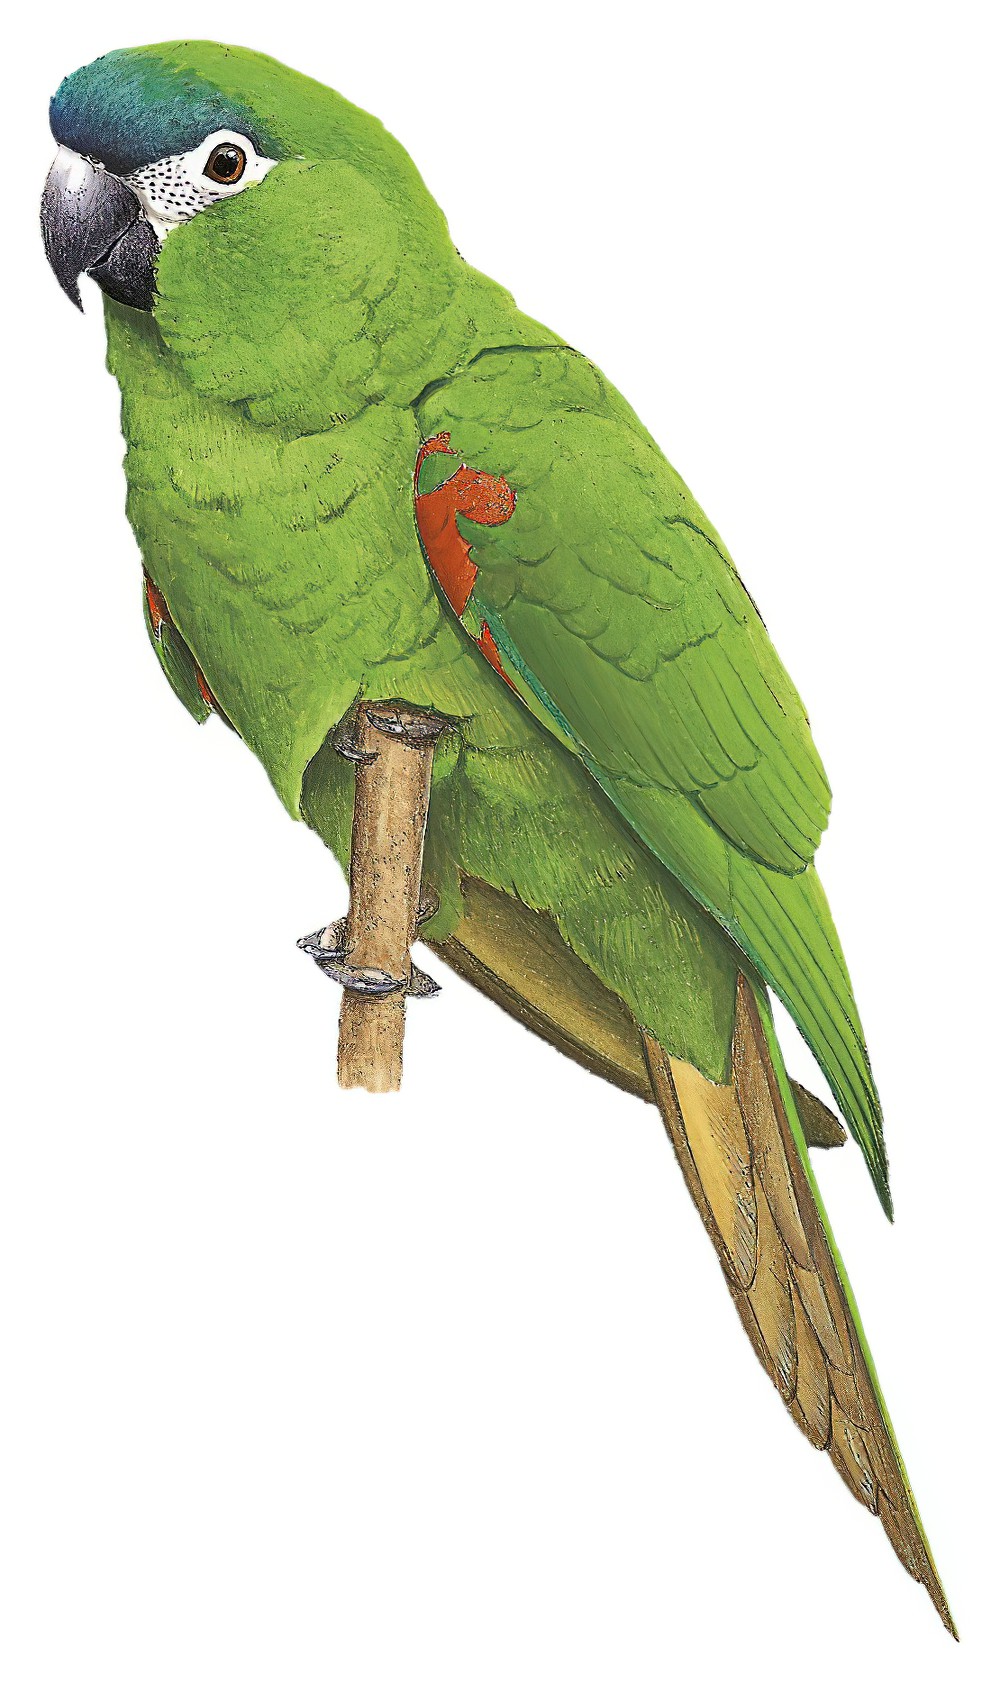 Red-shouldered Macaw / Diopsittaca nobilis